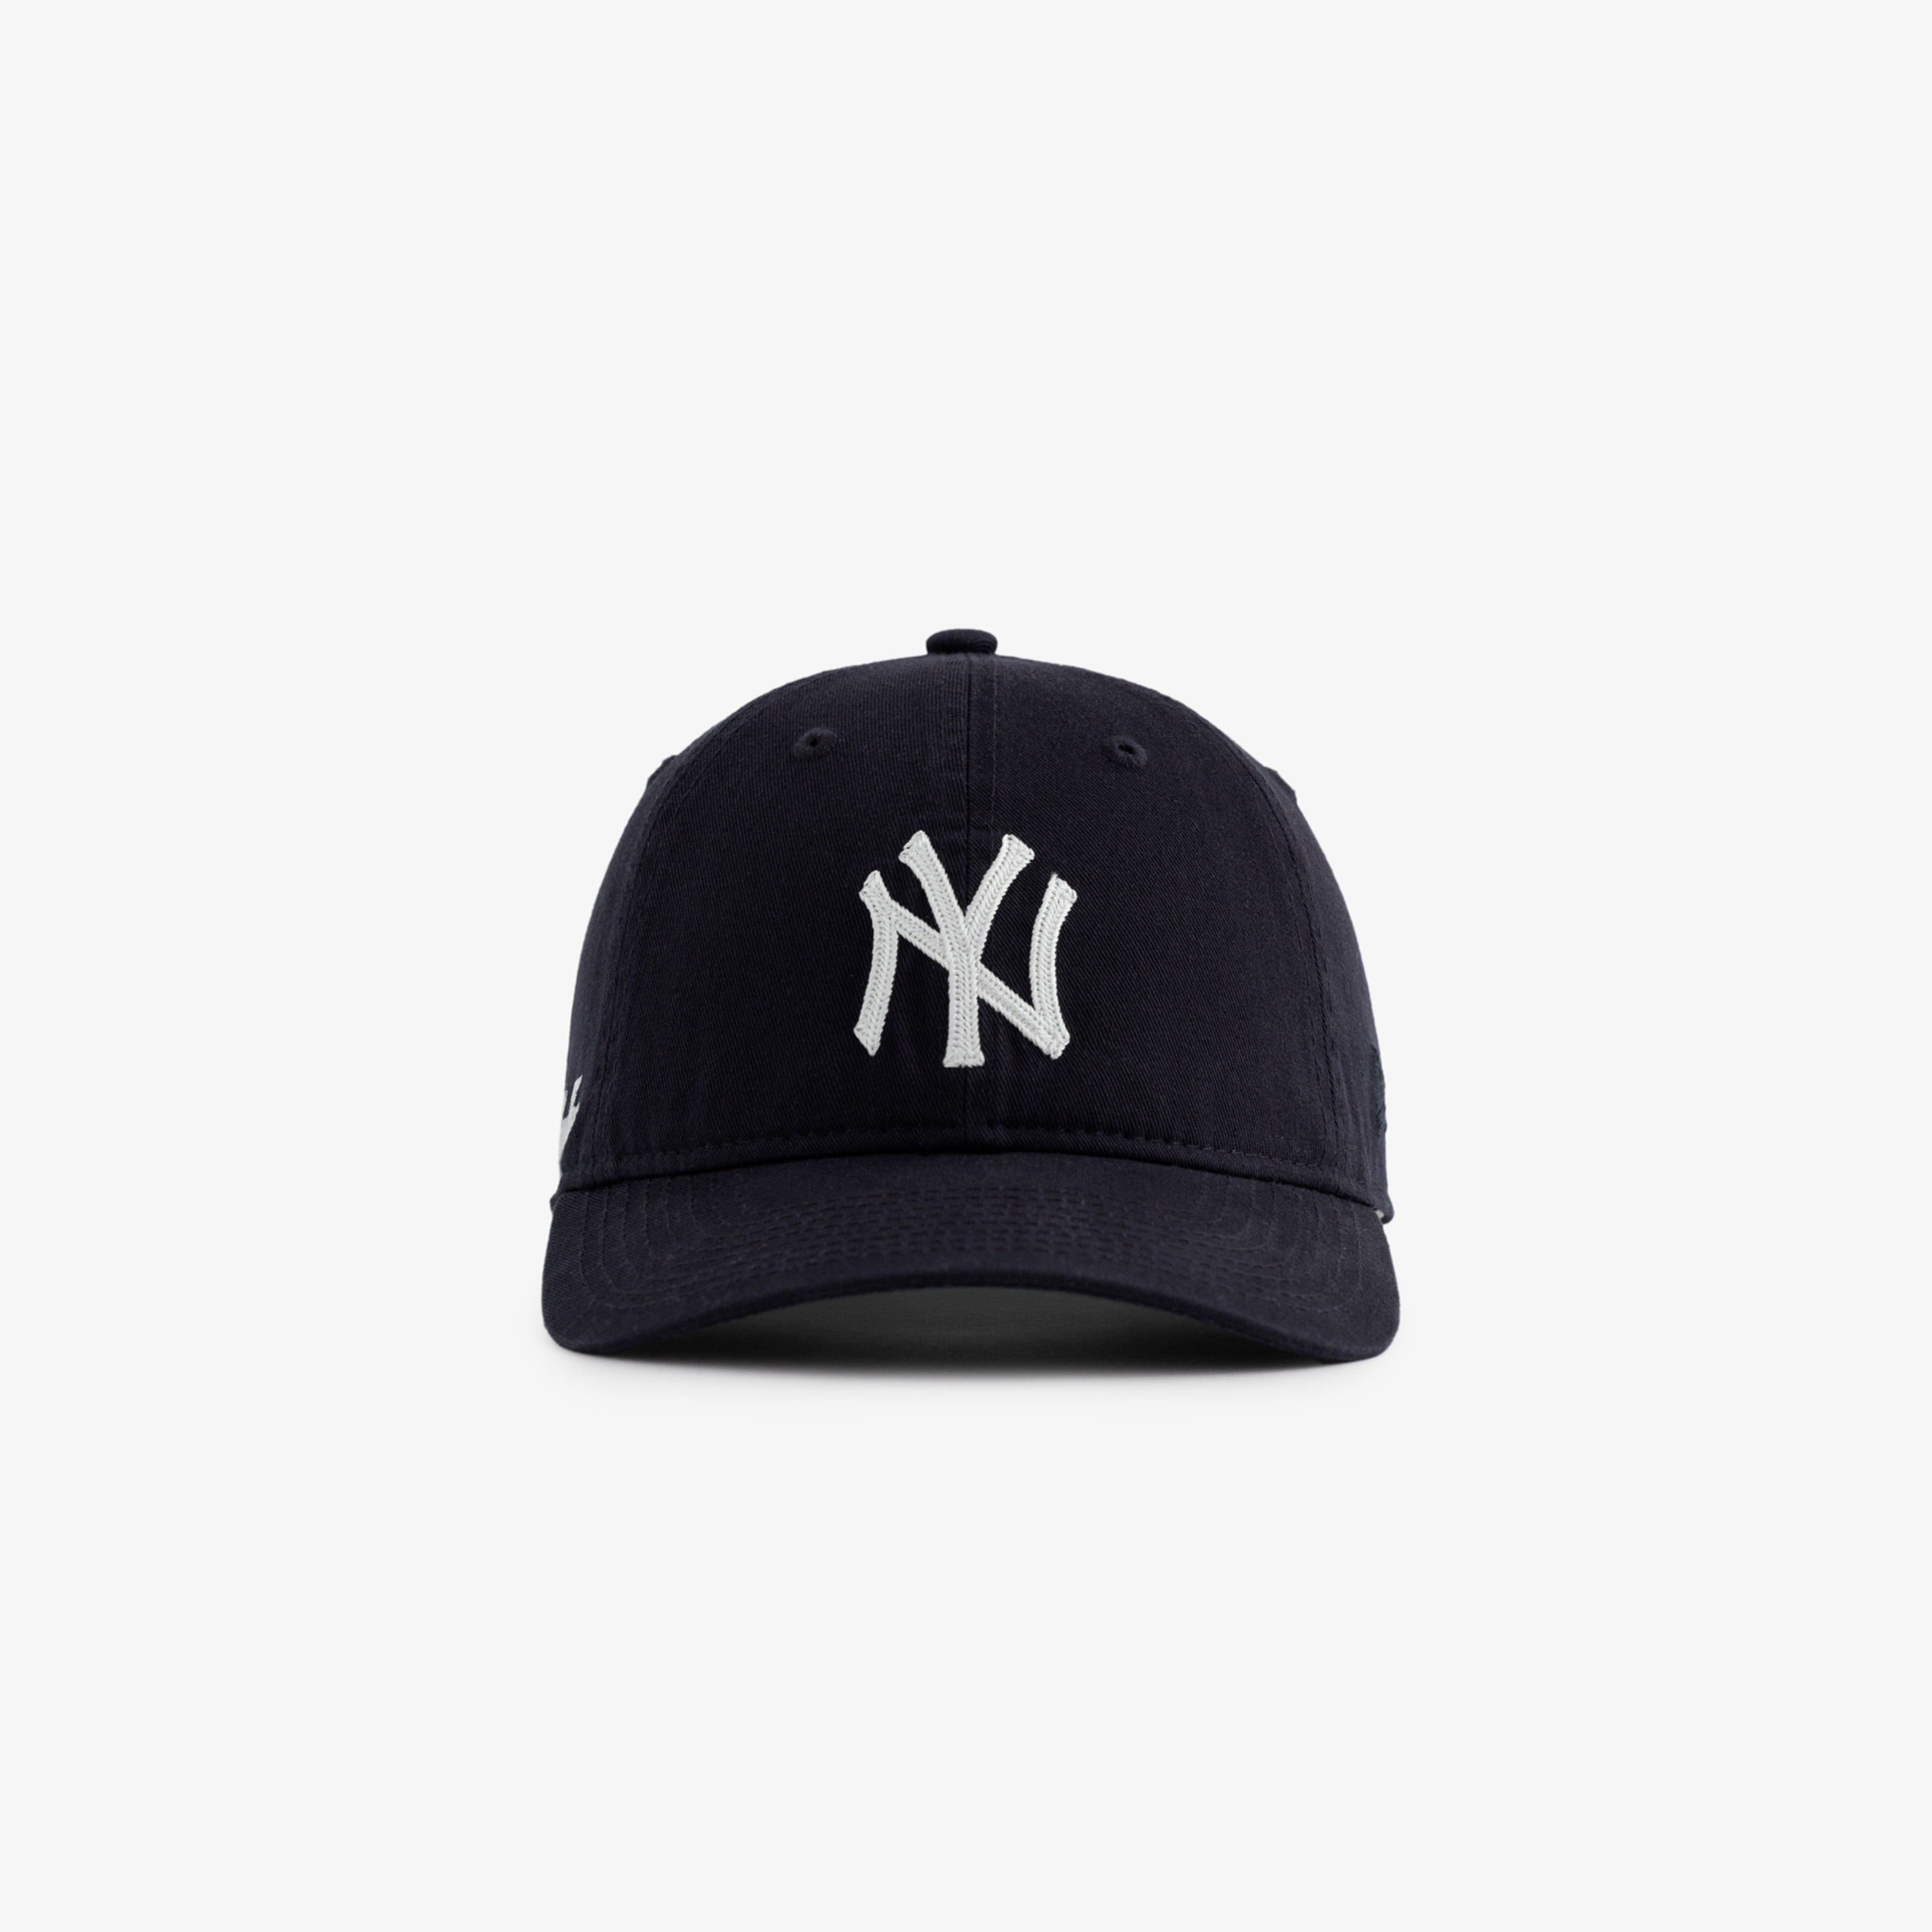 ALD / New Era Chain Stitch Yankees Ballpark Hat